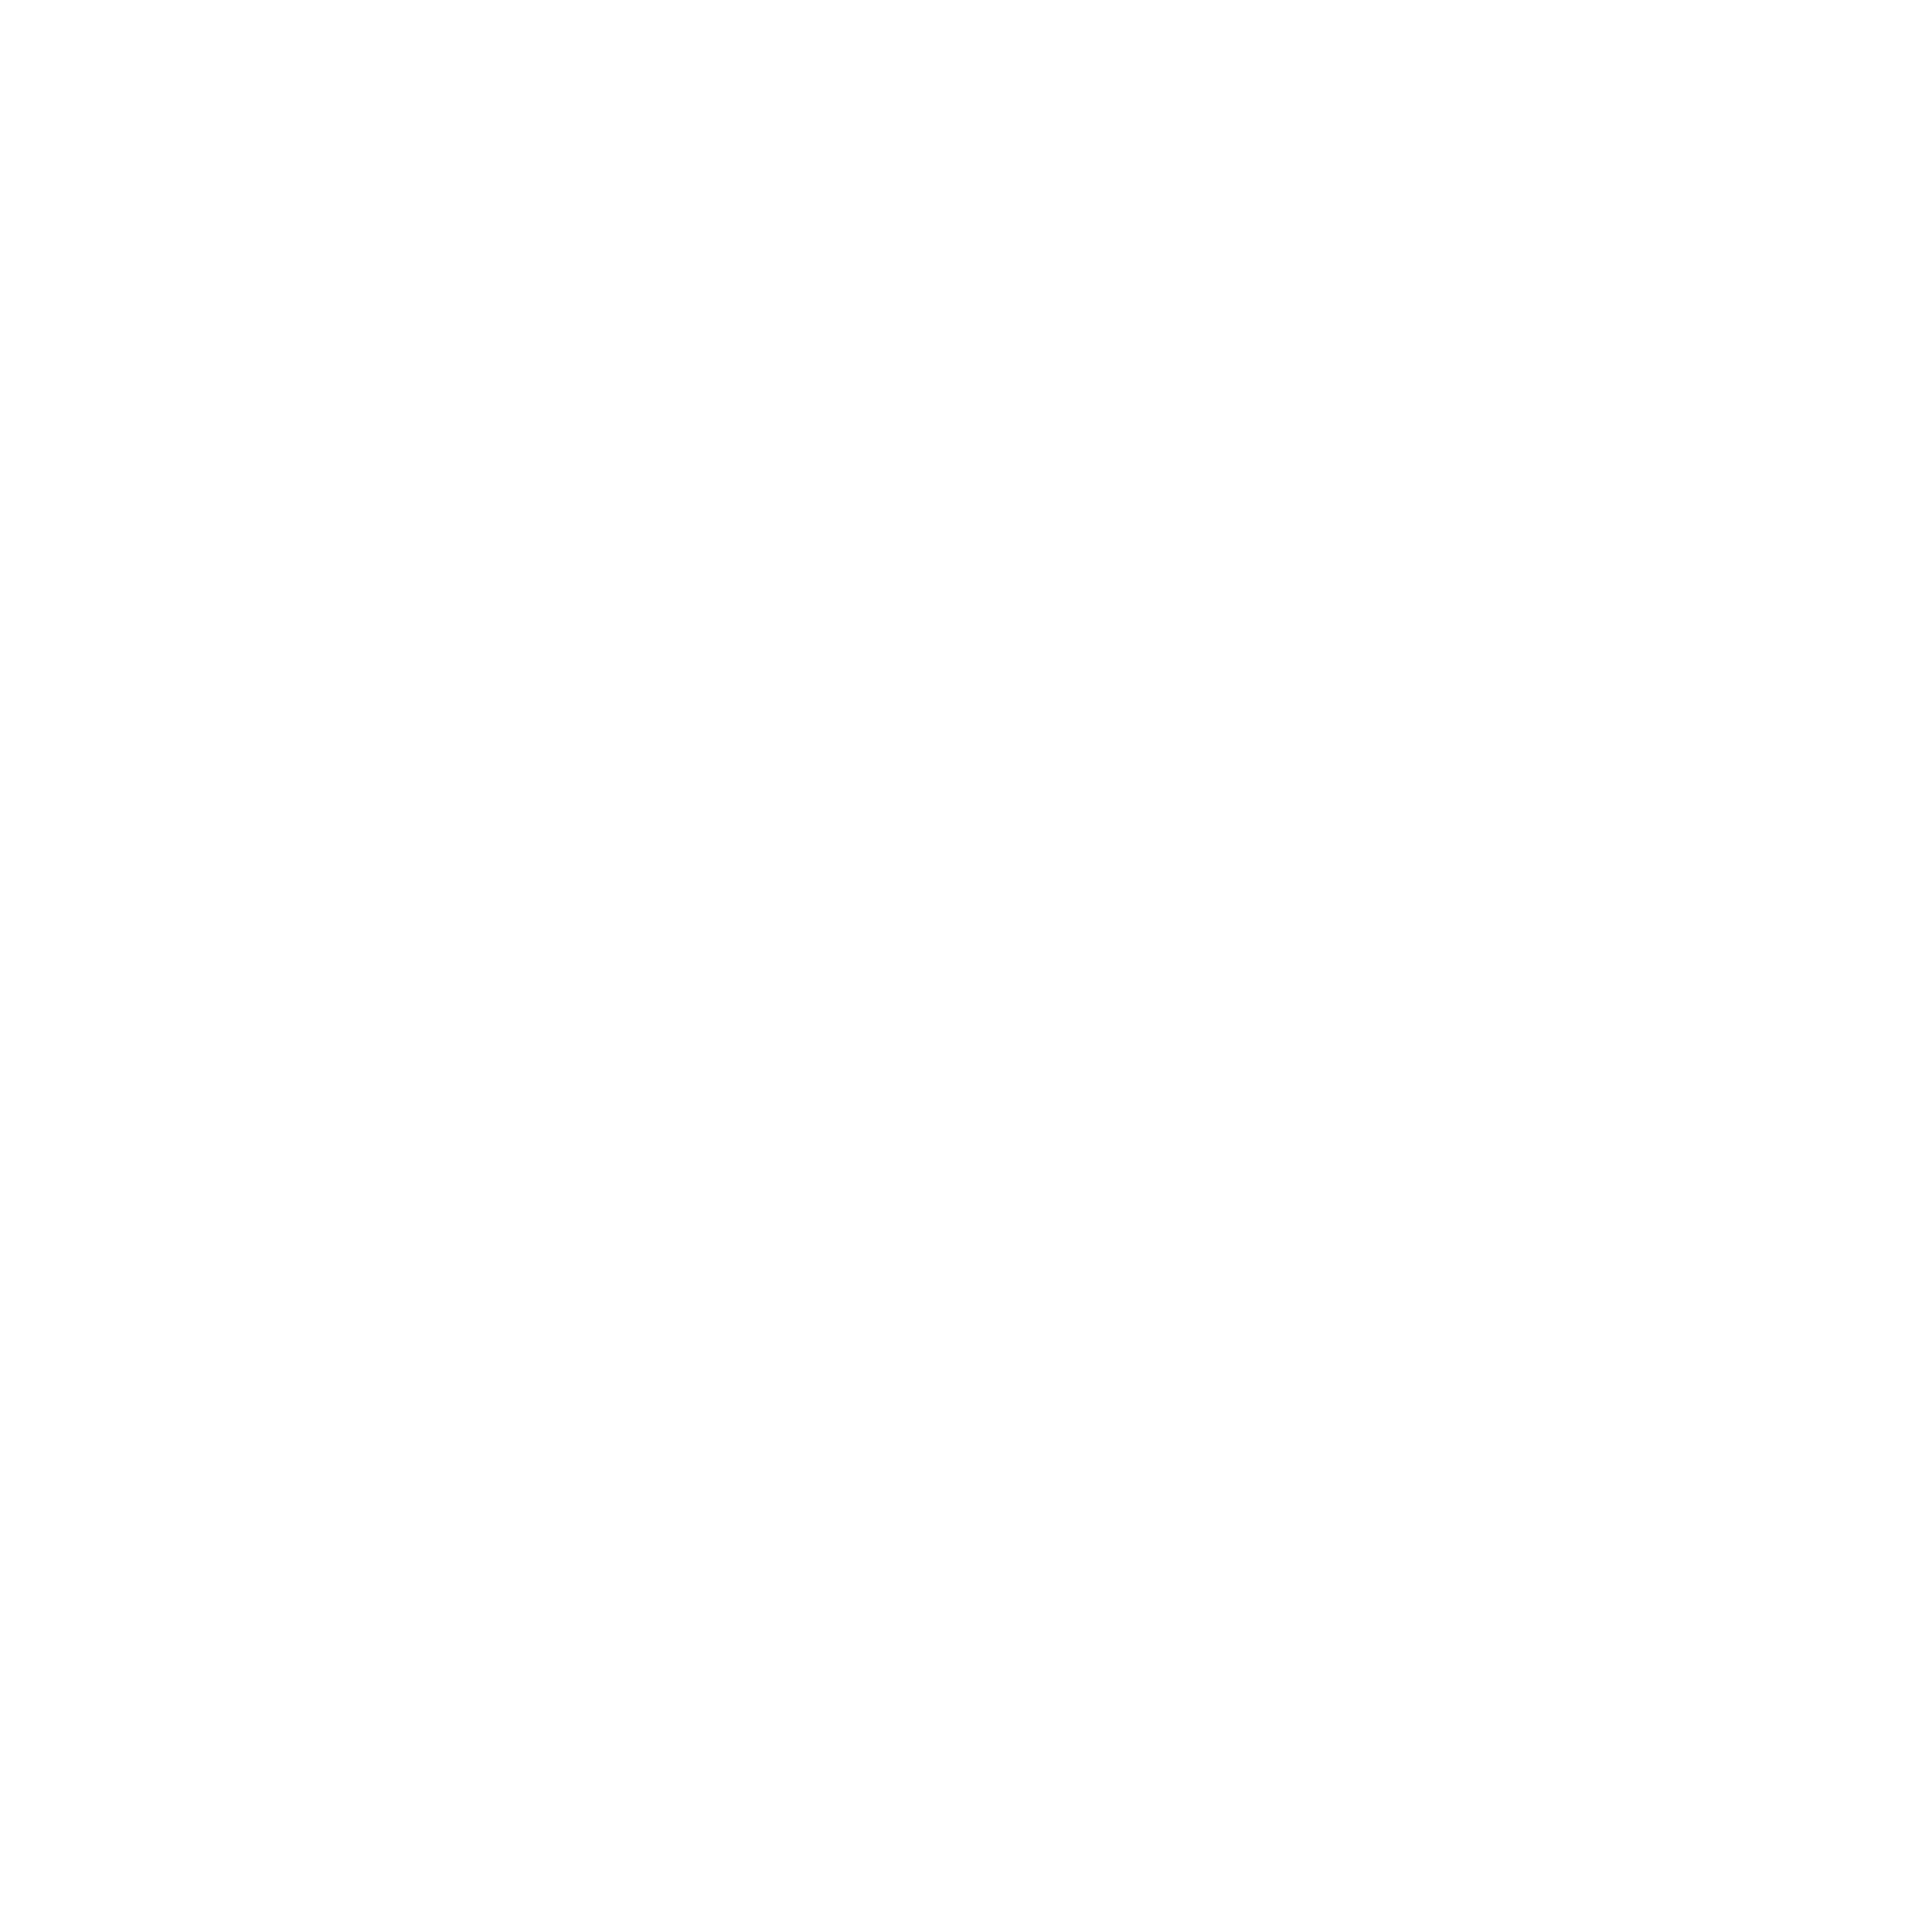 Pasta Factory logo